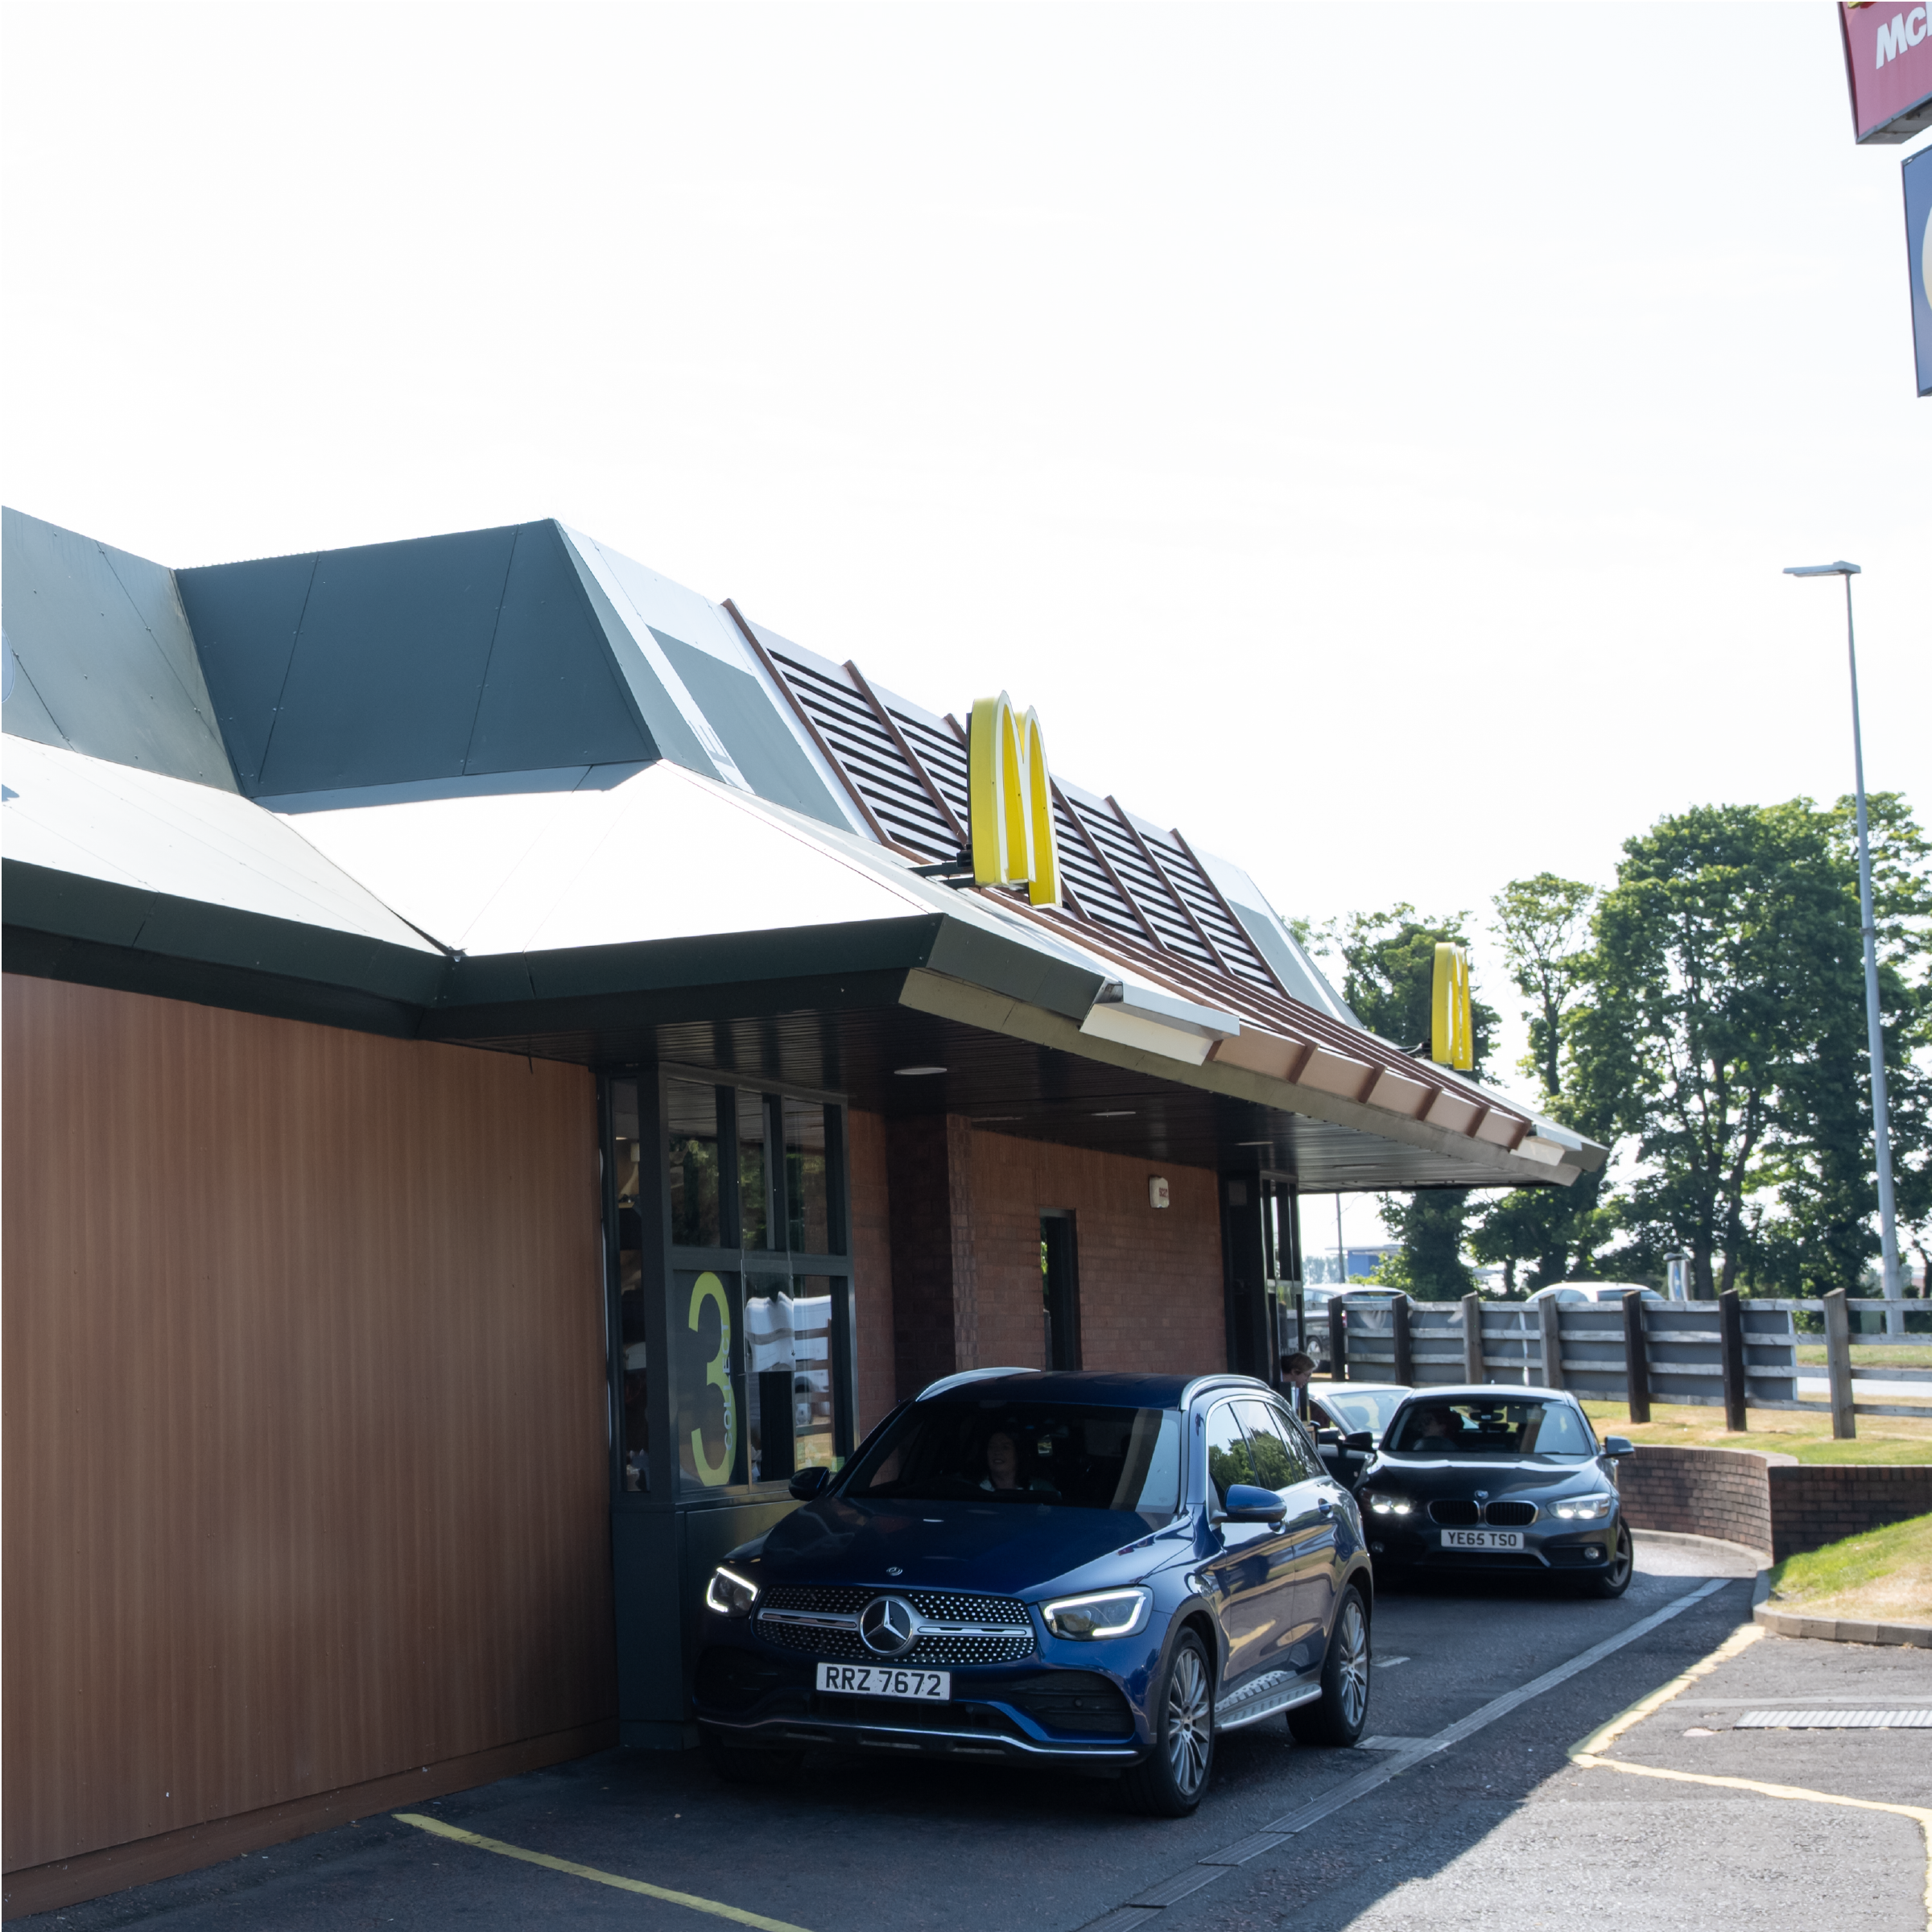 Drive-Thru at McDonalds Sprucefield